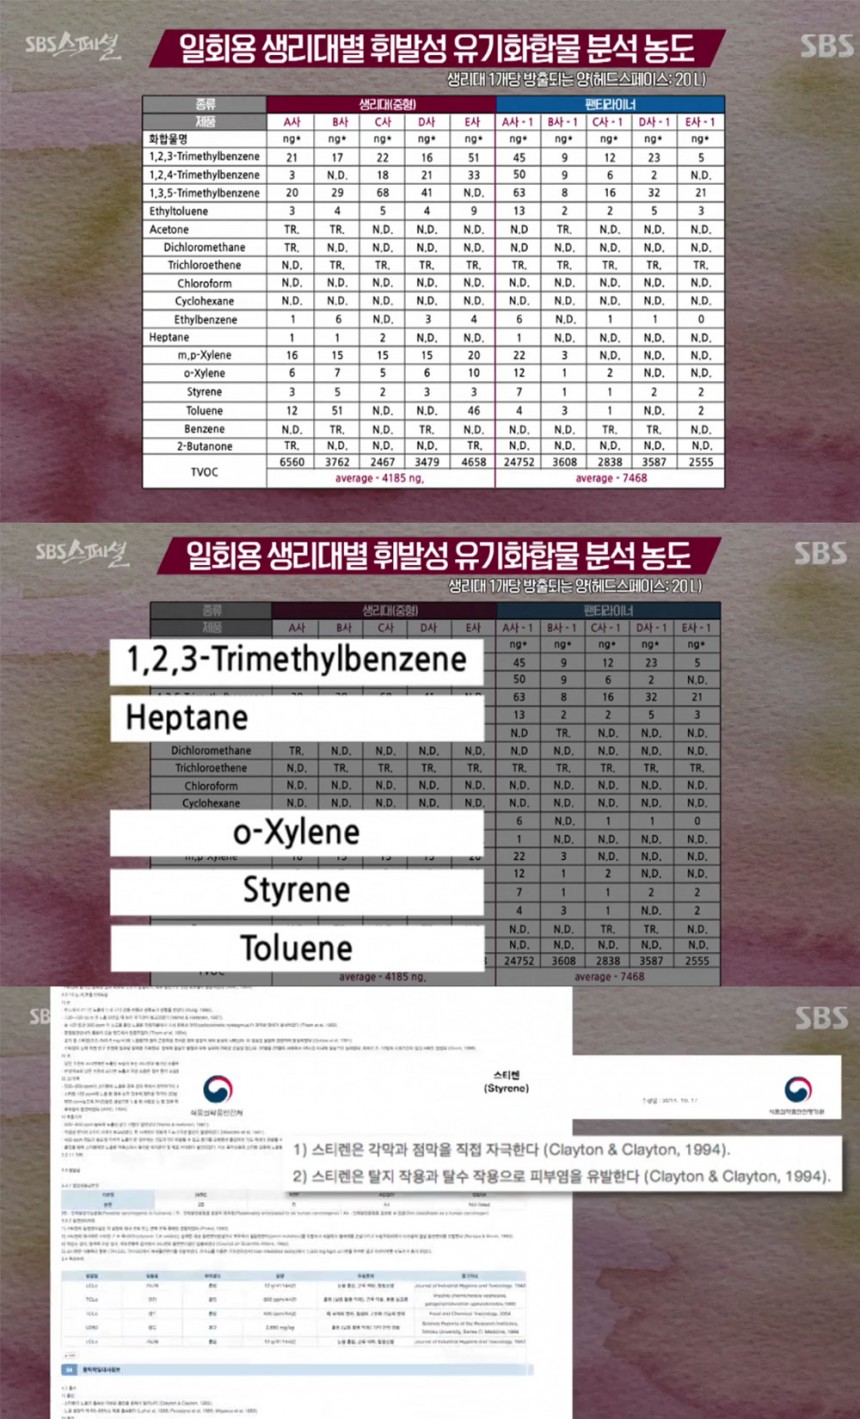 ‘SBS 스페셜’ 방송 화면 / SBS ‘SBS 스페셜’ 방송 캡처